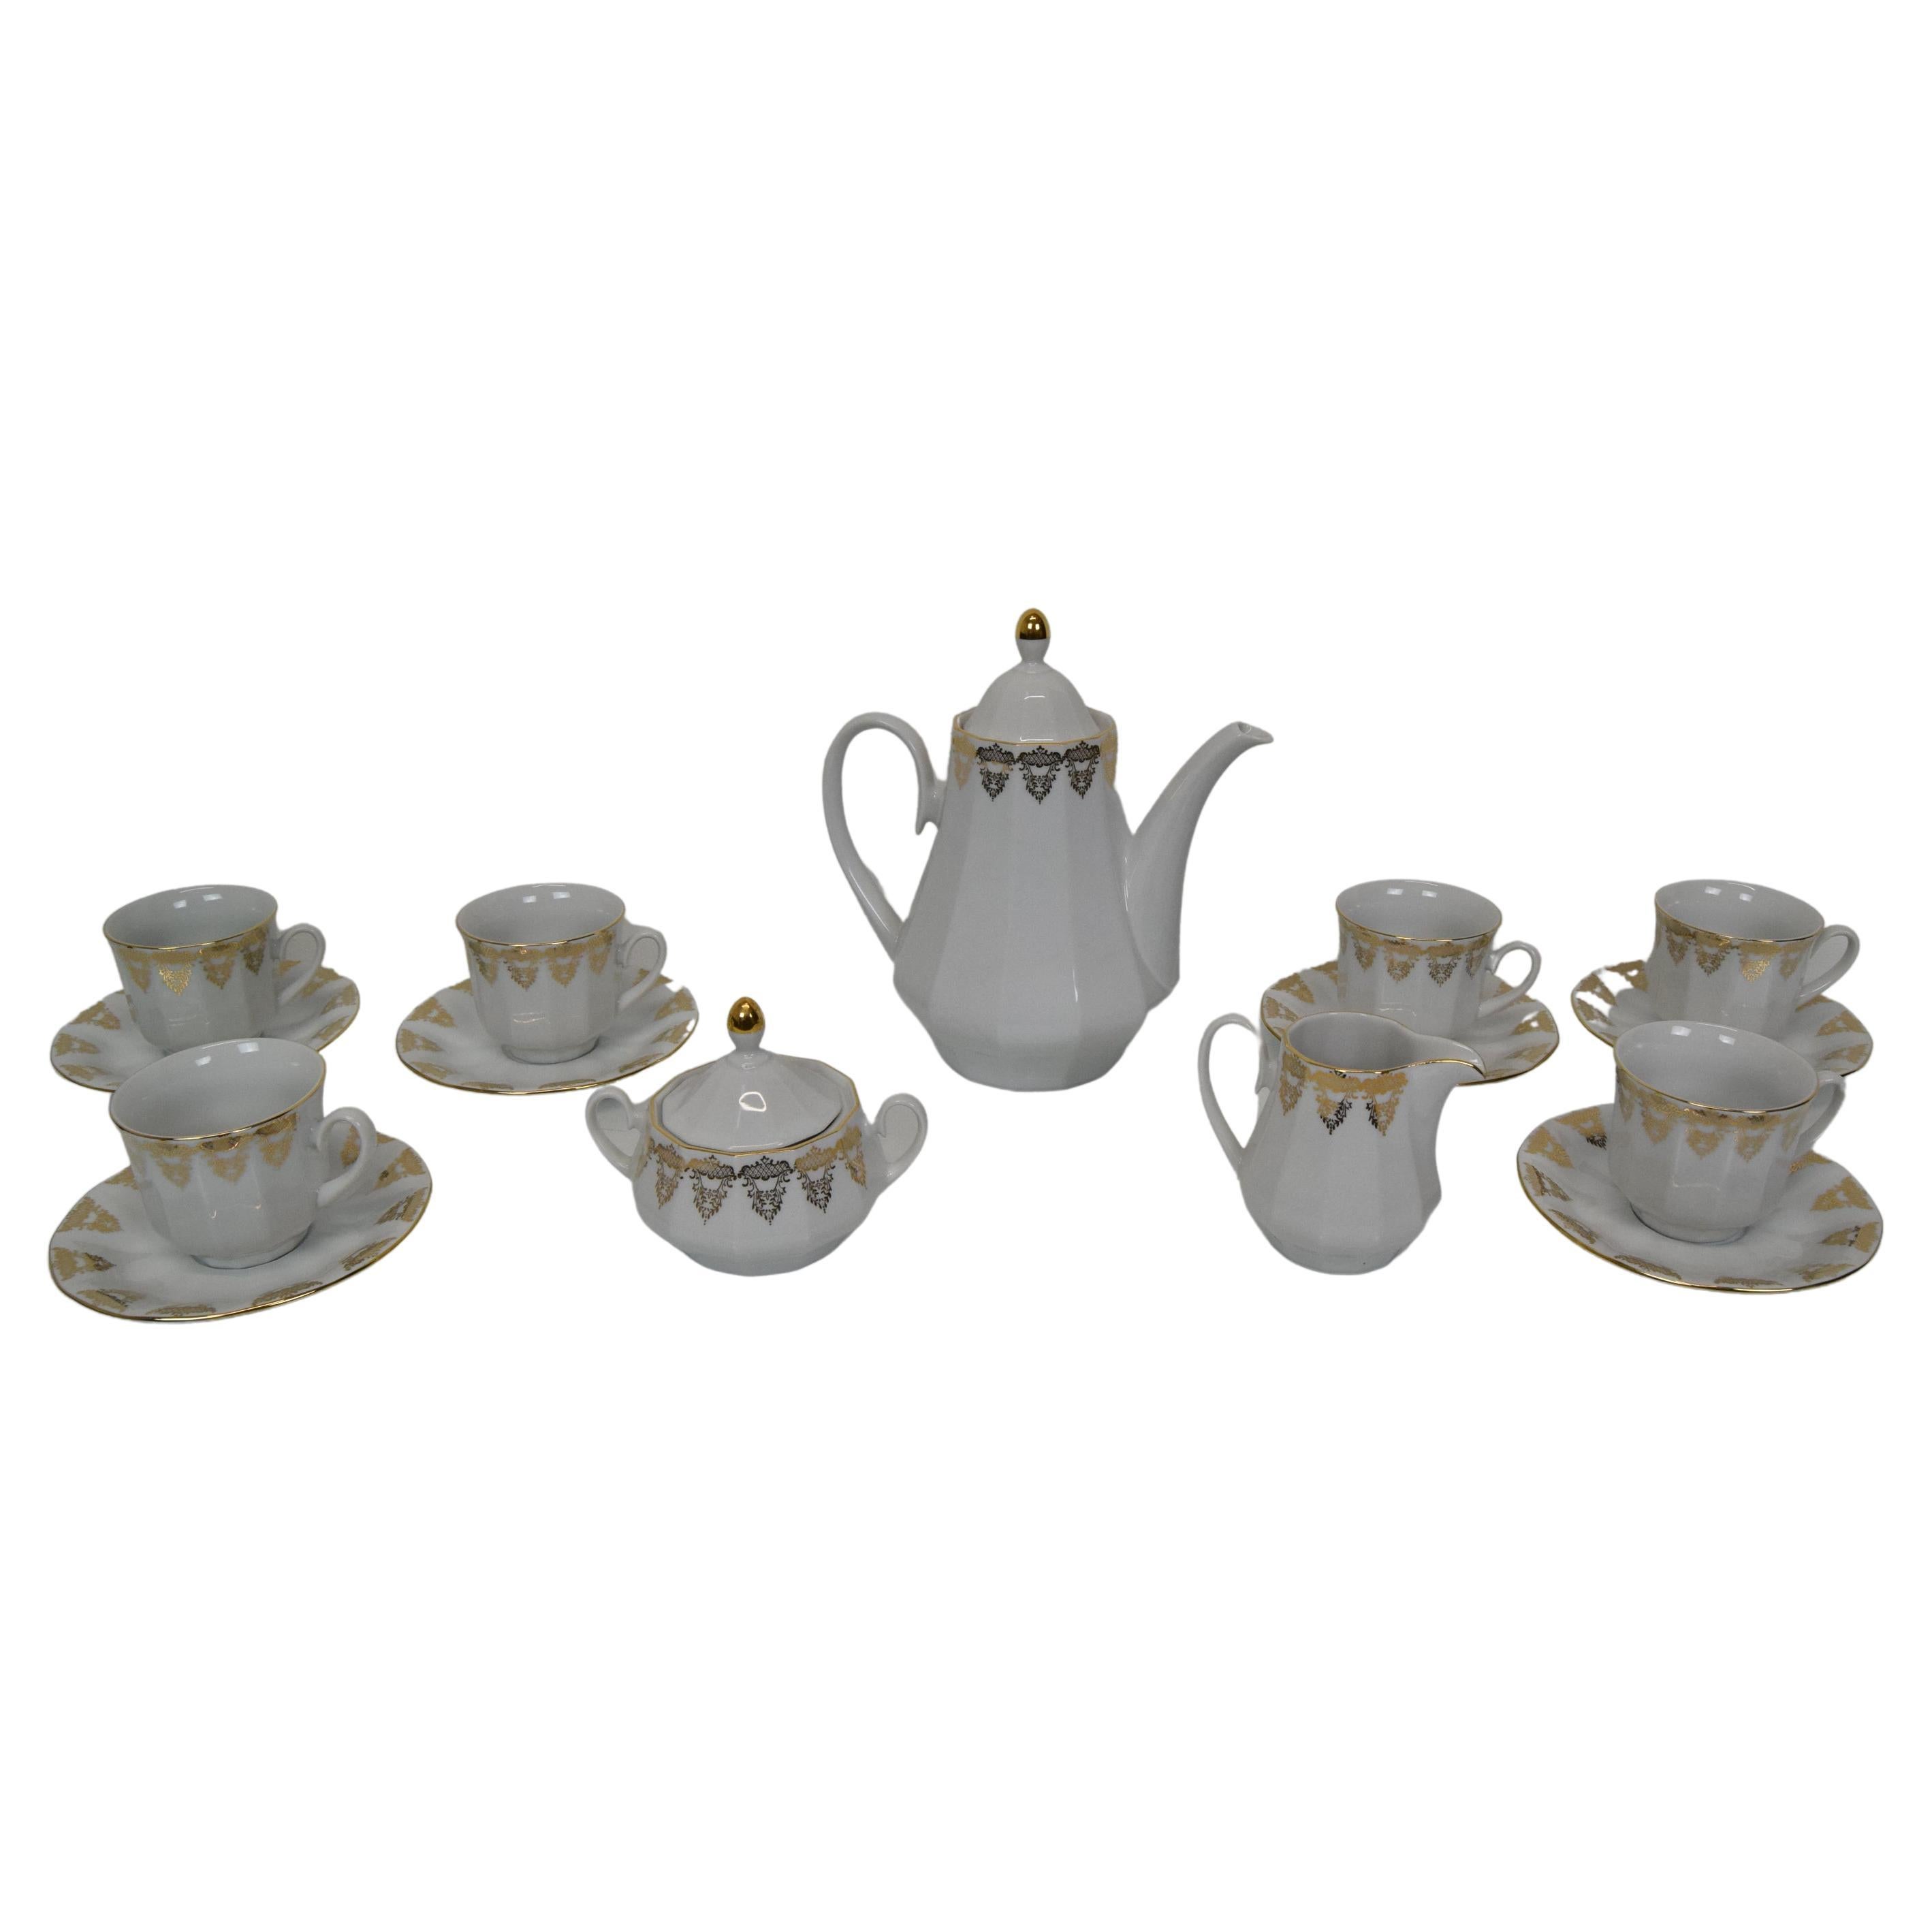 Set Porcelain for Tea or Coffee, Carlsbad Porcealin by Company Epiag D.F